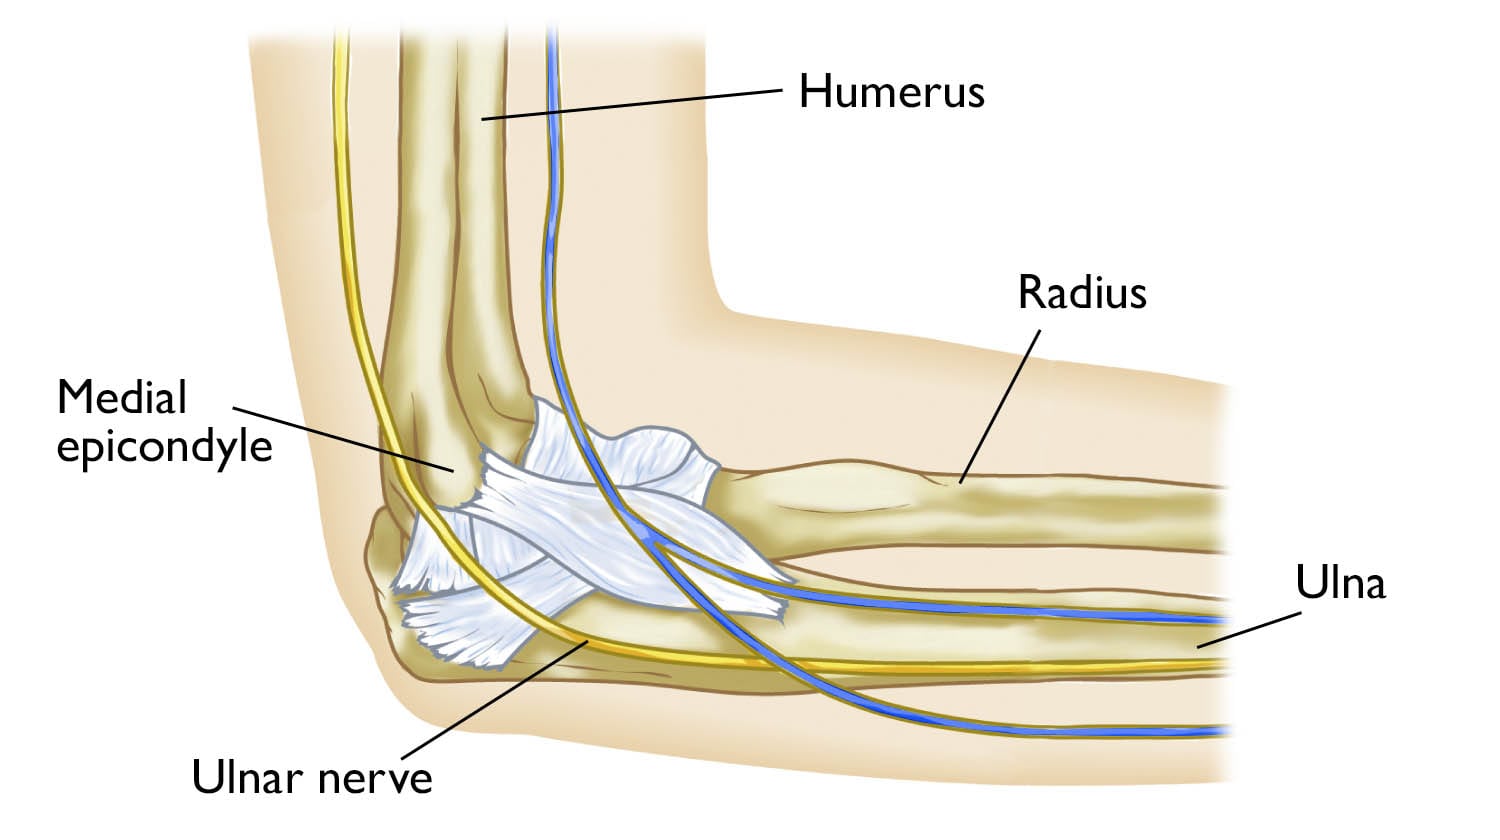 Path of ulnar nerve through elbow